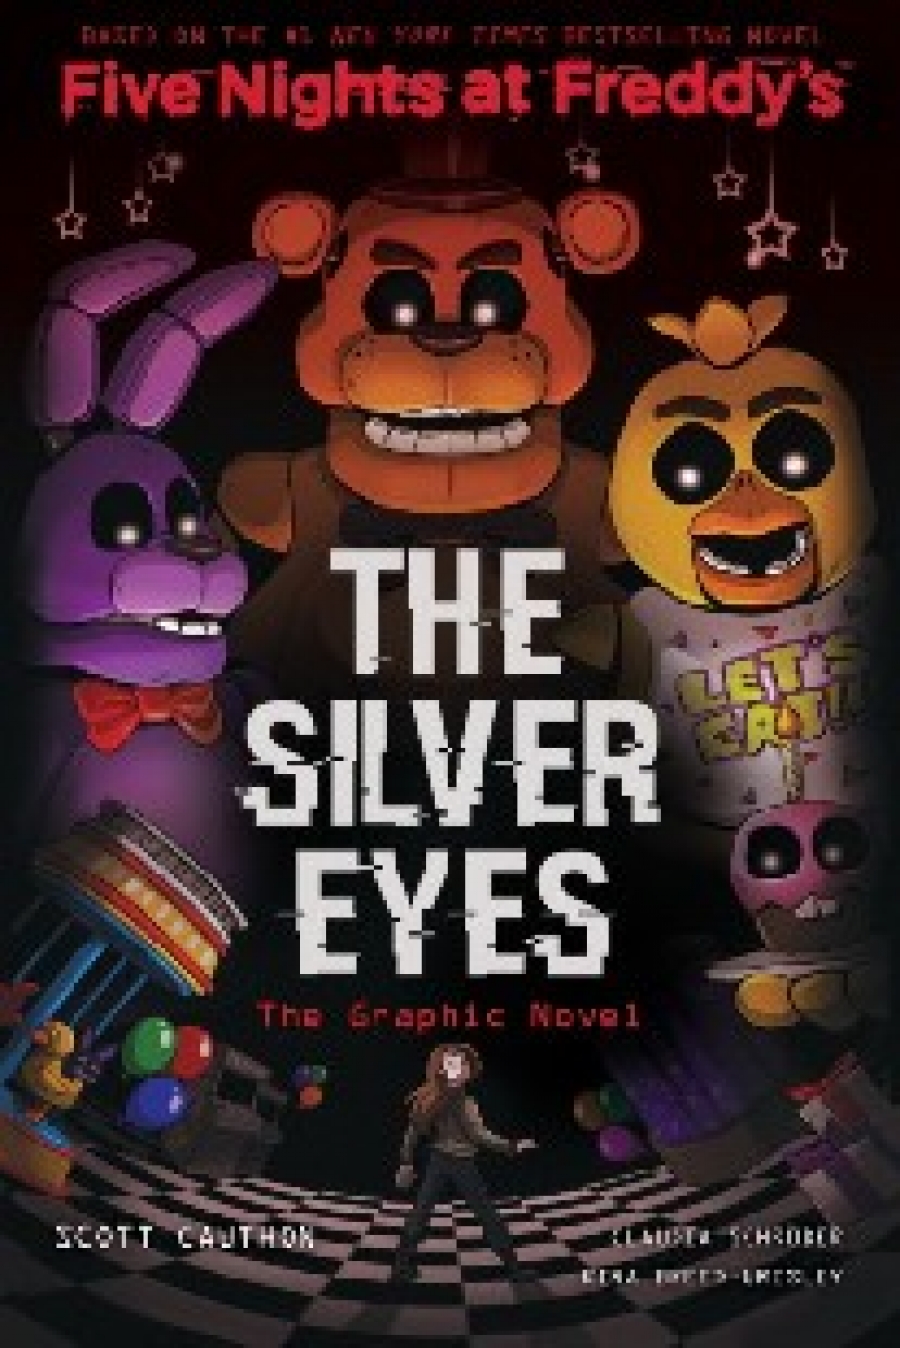 Breed-Wrisley Kira, Cawthon Scott The Silver Eyes (Five Nights at Freddy's Graphic Novel #1) 